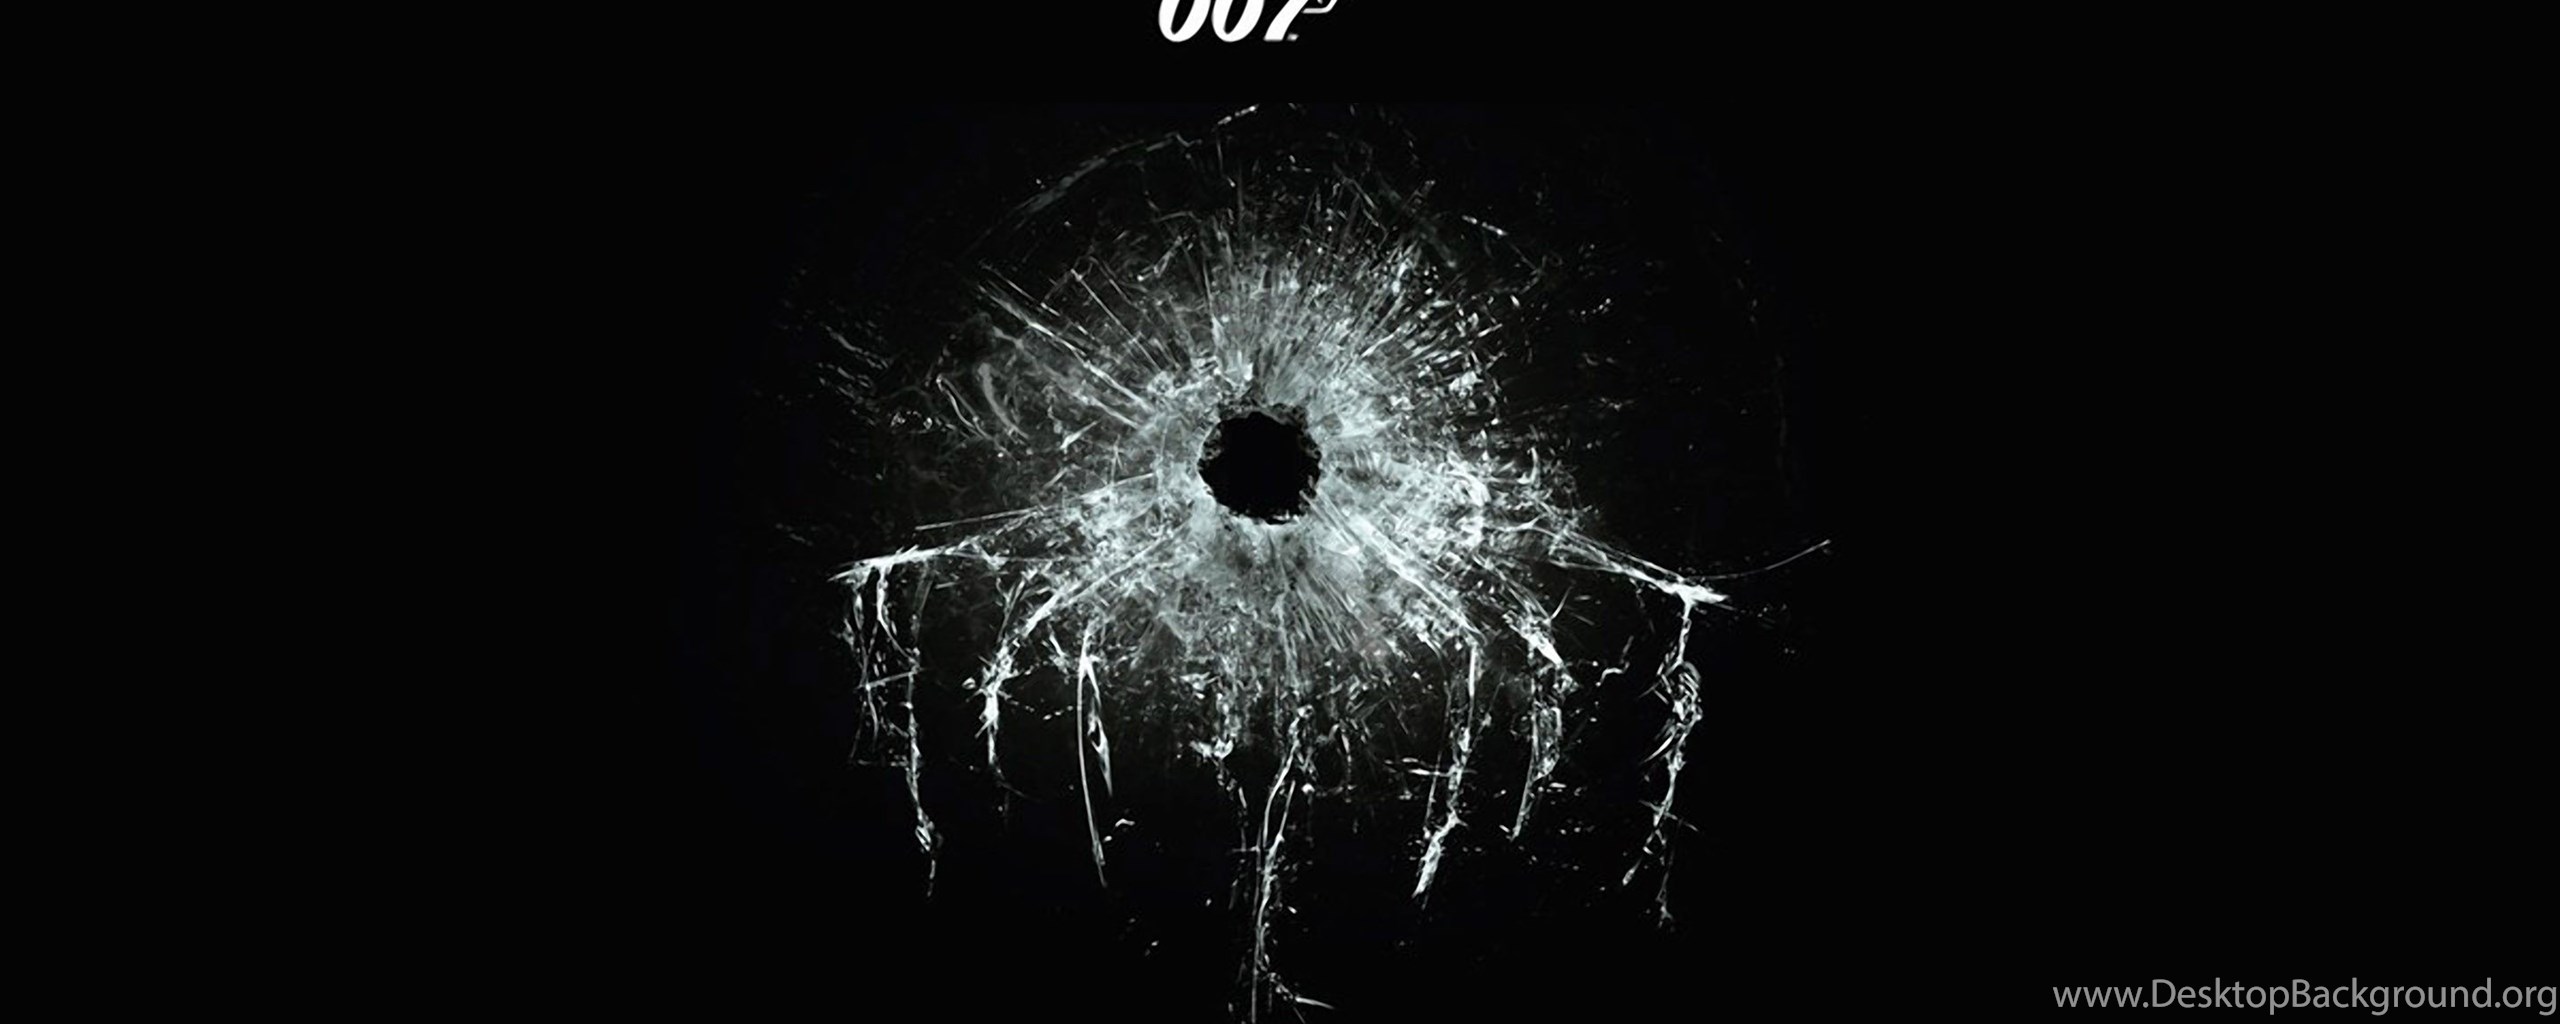 Spectre is a brilliant. 007 Спектр осьминог. Спектр 007 знак. Alan Spectre фото. Spectre.